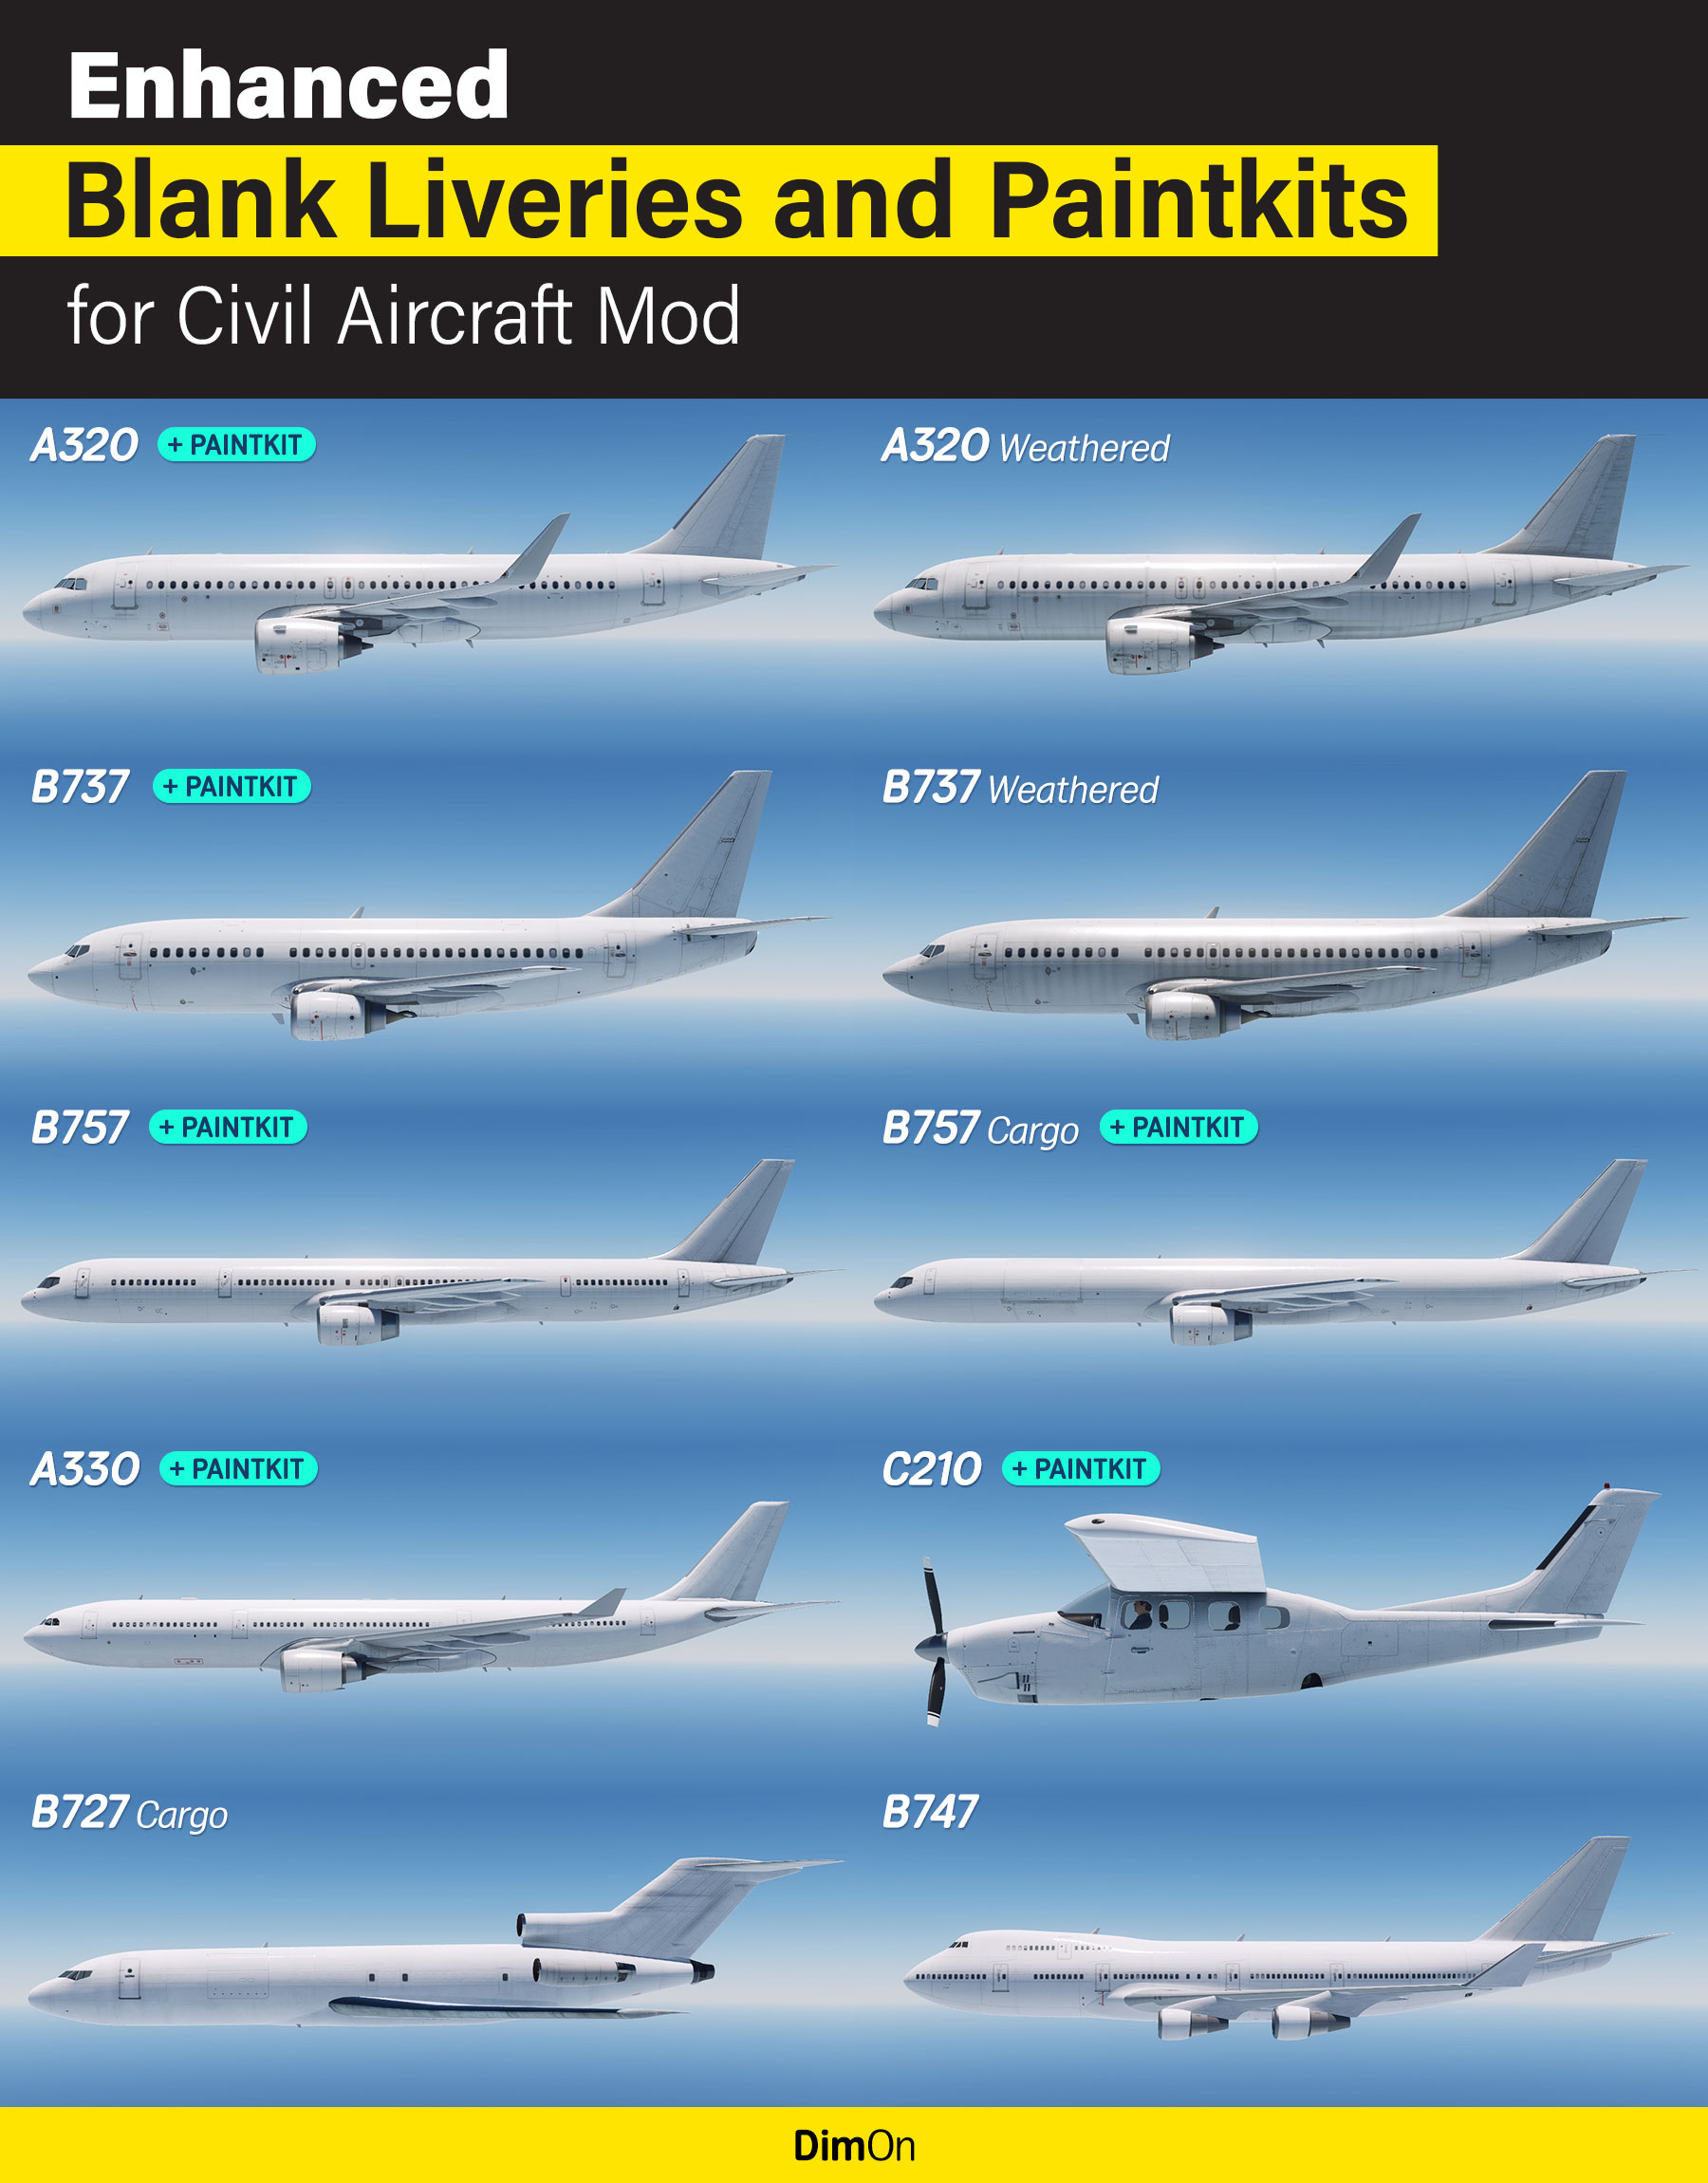 Enhanced Blank Liveries and Paintkits for Civil Aircraft Mod (CAM)